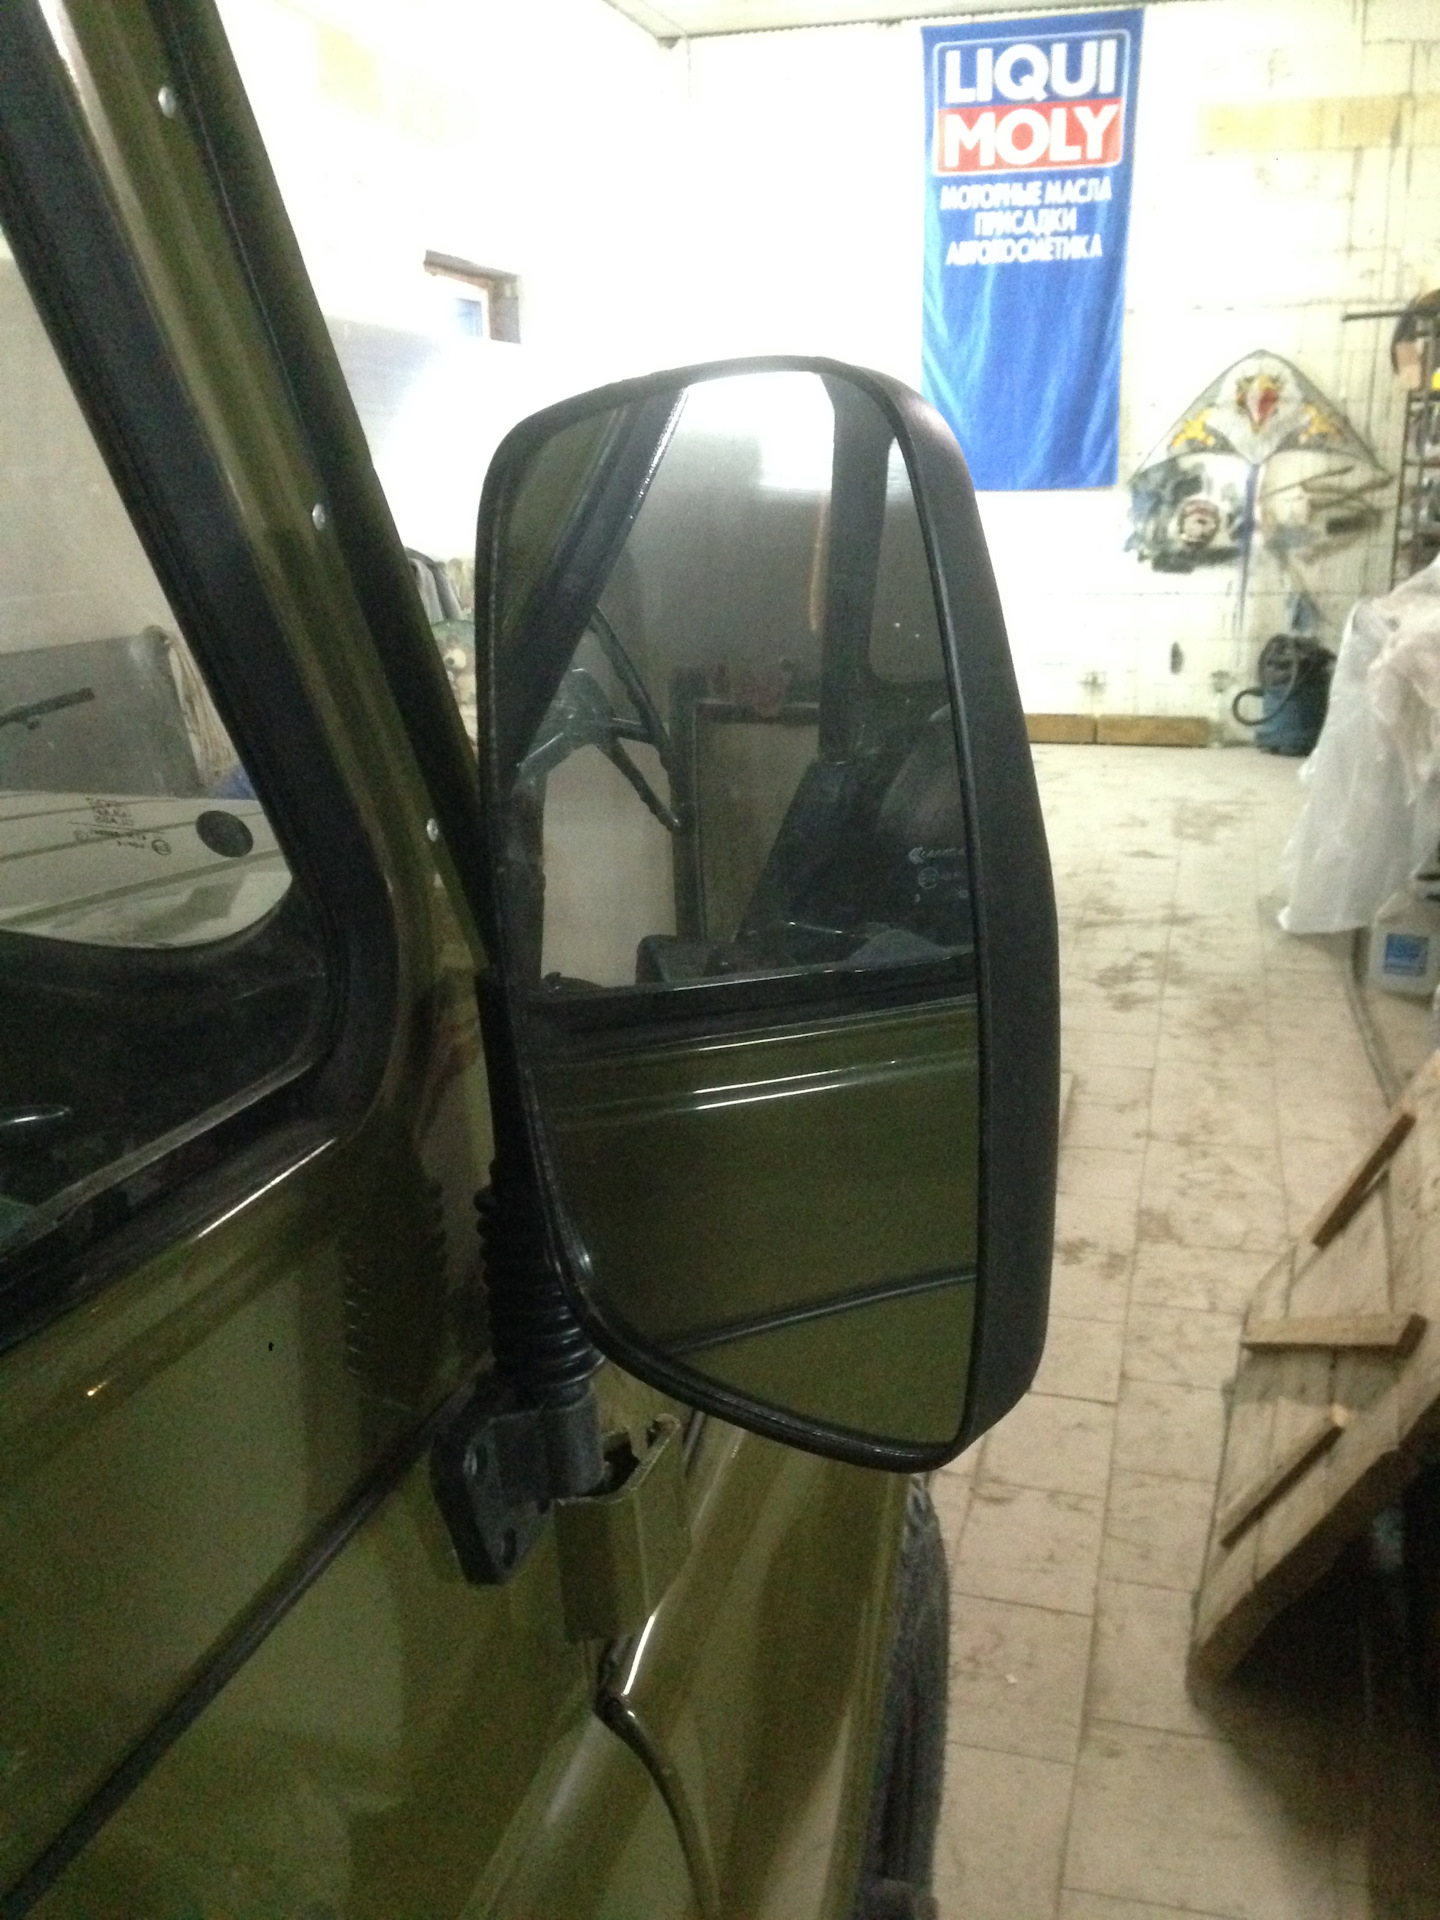 Купить зеркала на уаз. Зеркала на УАЗ 469. Крепление зеркал на УАЗ 469. Зеркала УАЗ 469 старого образца. Зеркала Барс на УАЗ 469.